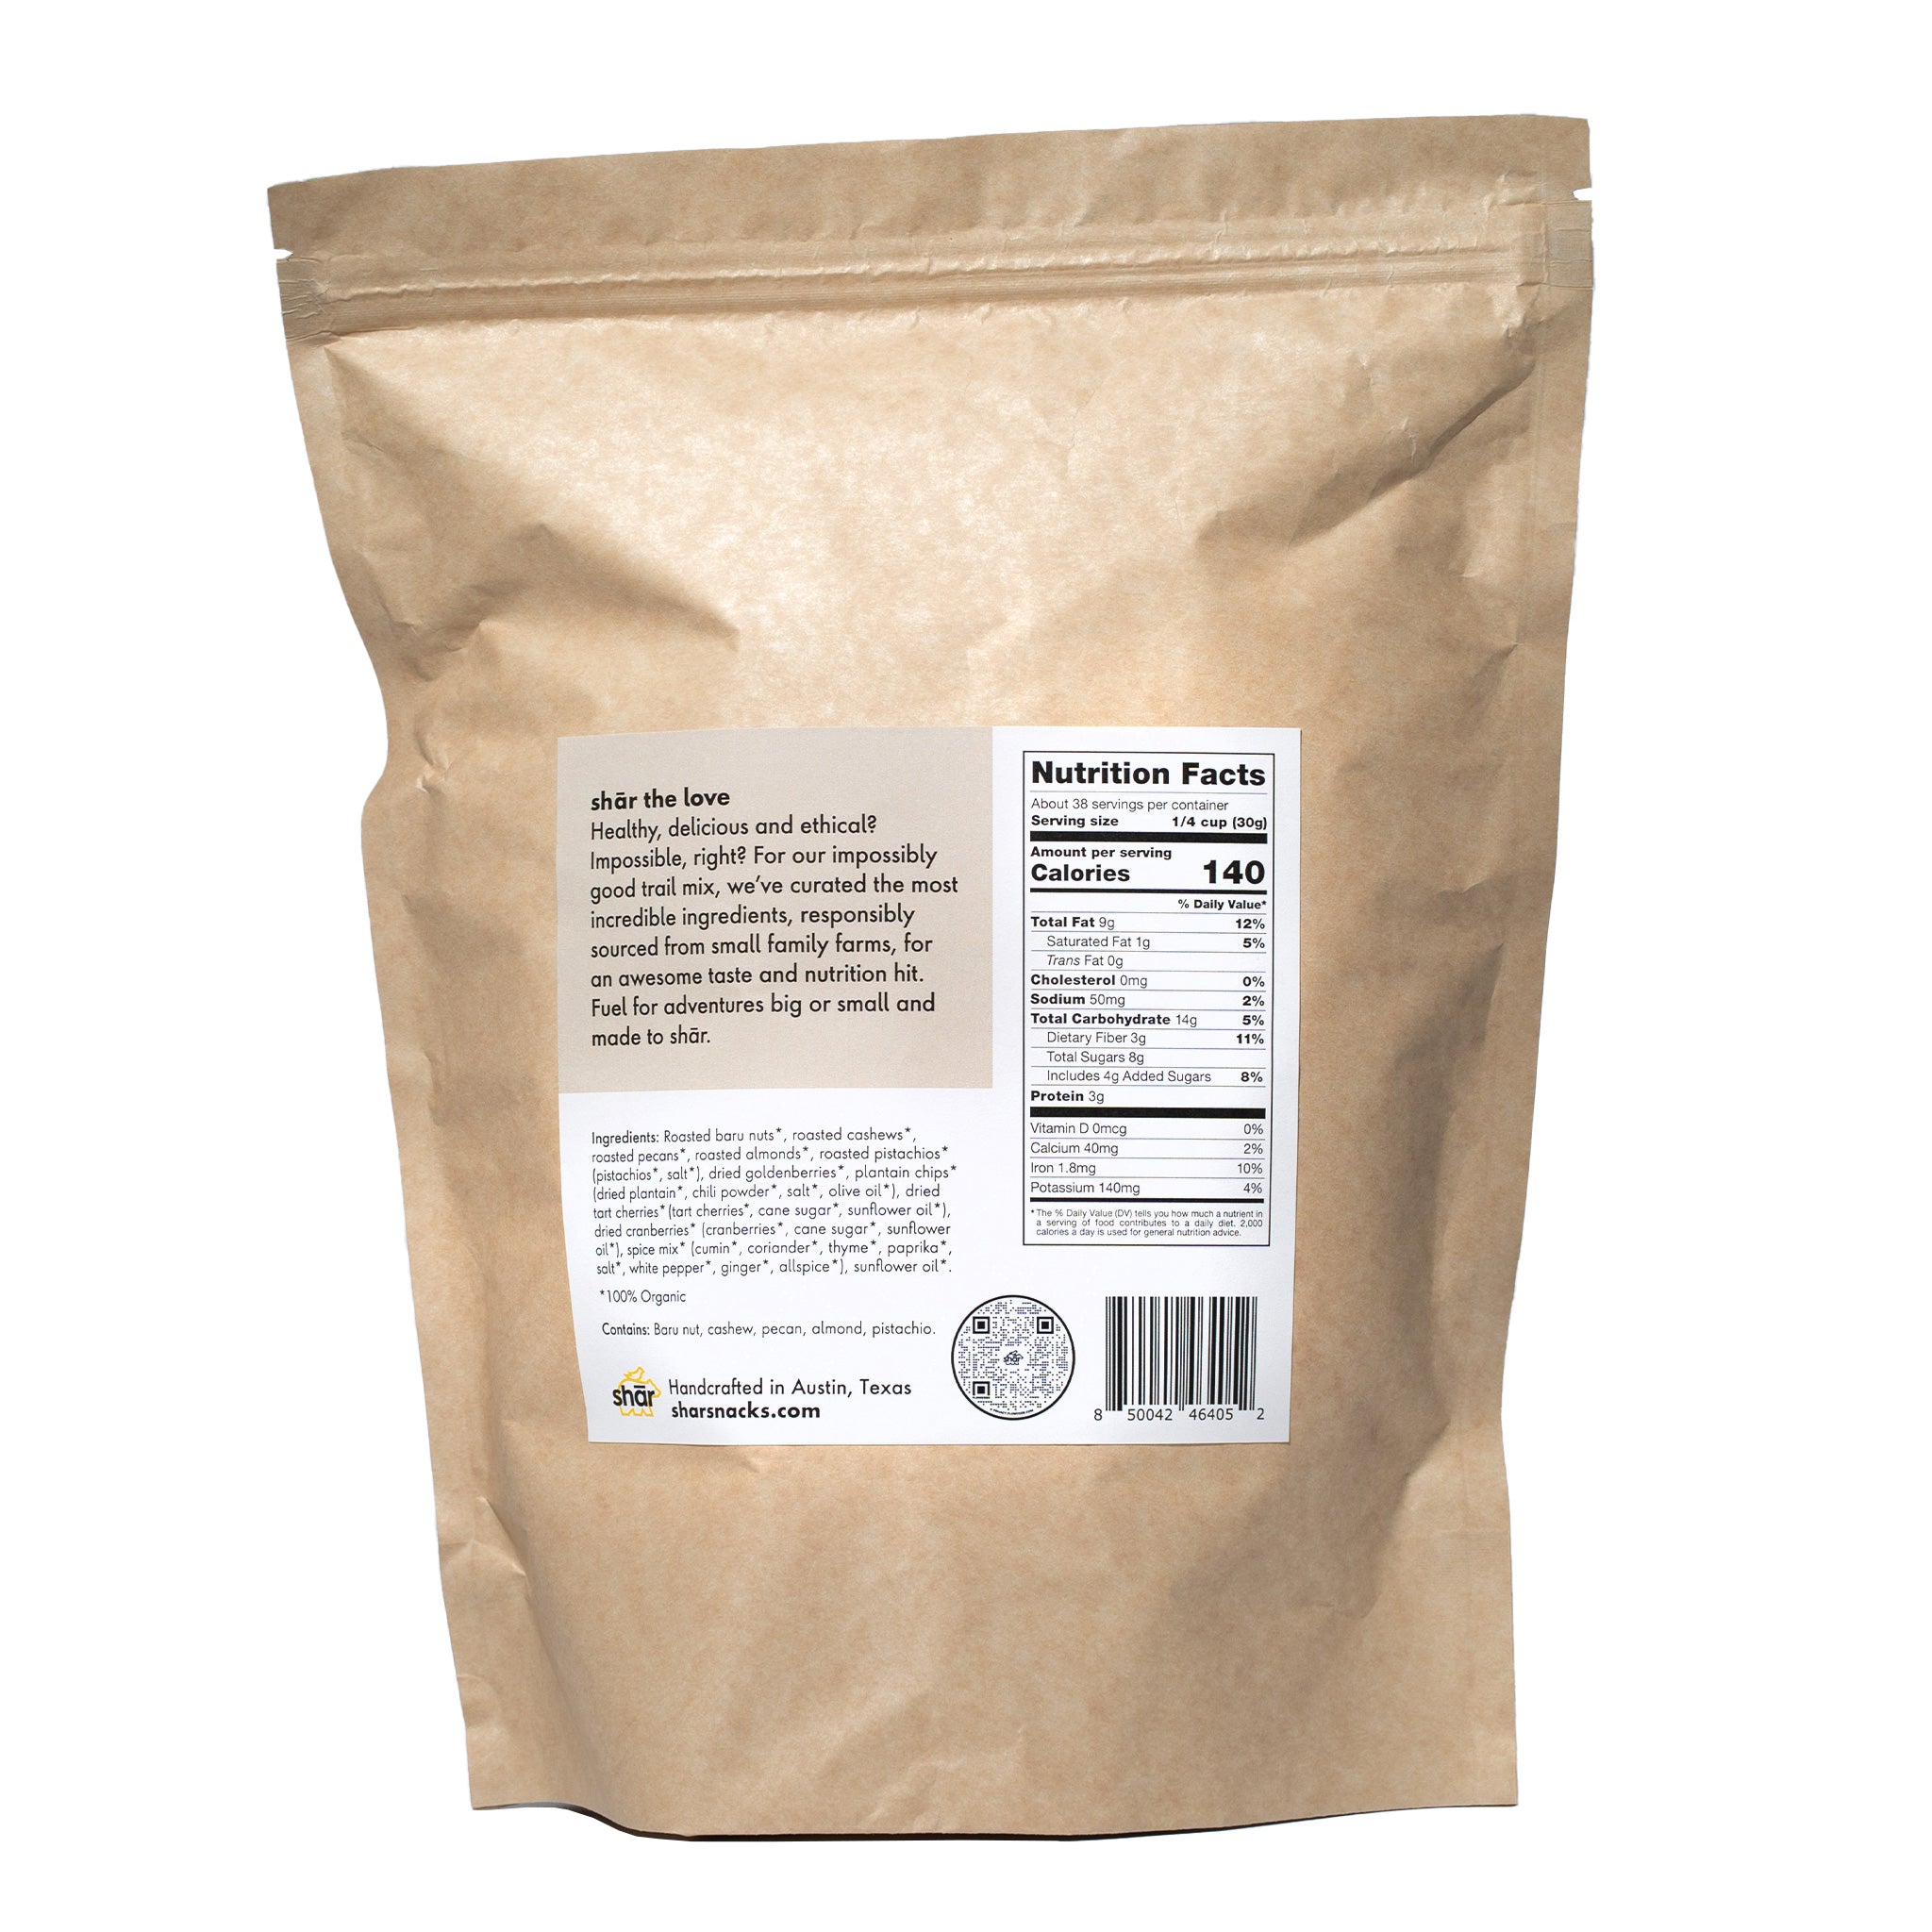 2.5 lb ethical shār bag – Savory healthy snack